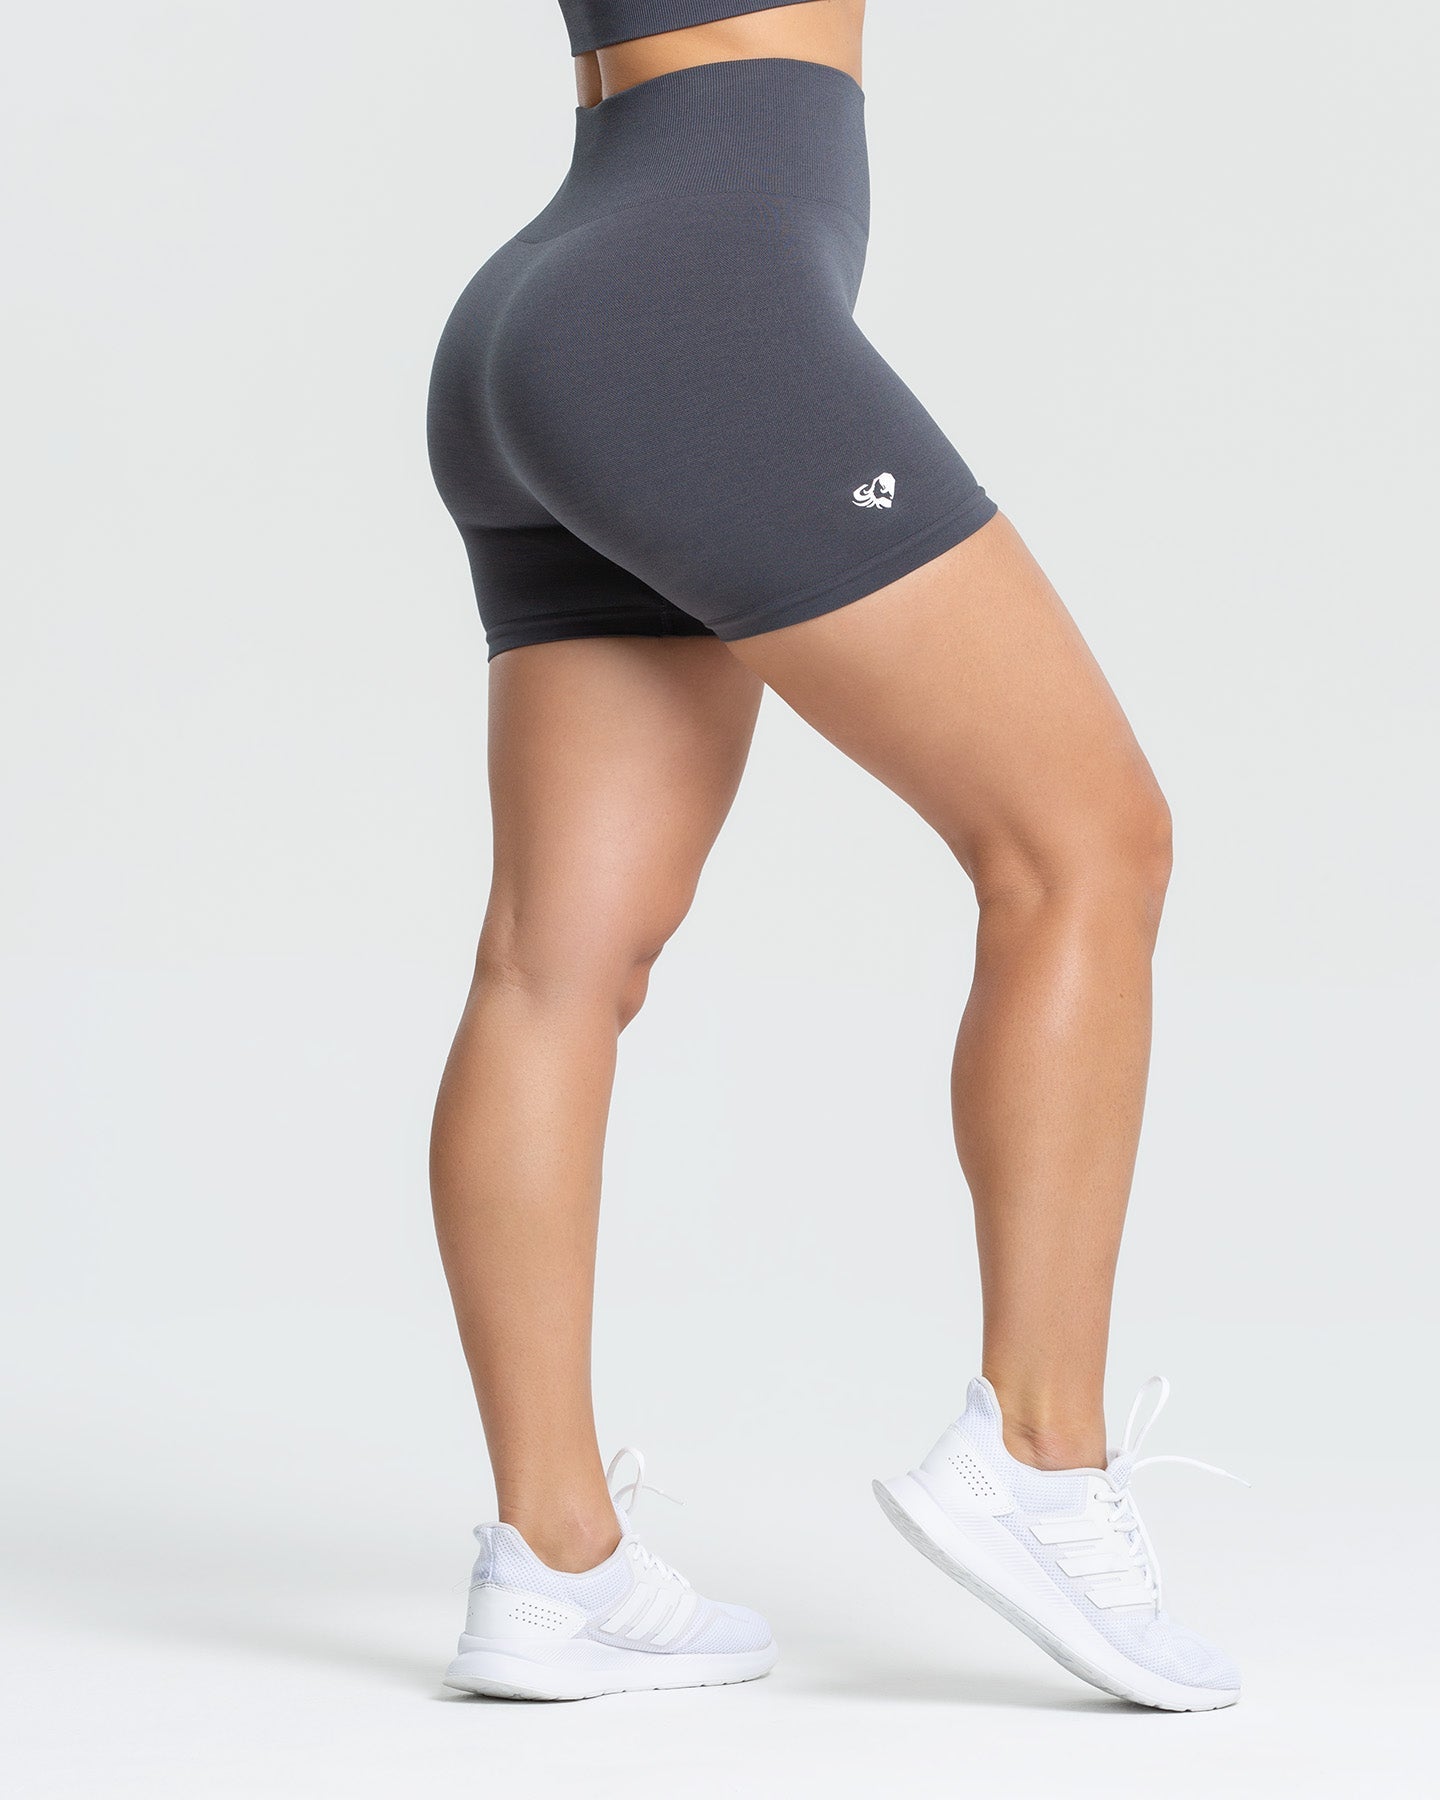 Women Athletic Shorts Online - Ladies Workout Shorts